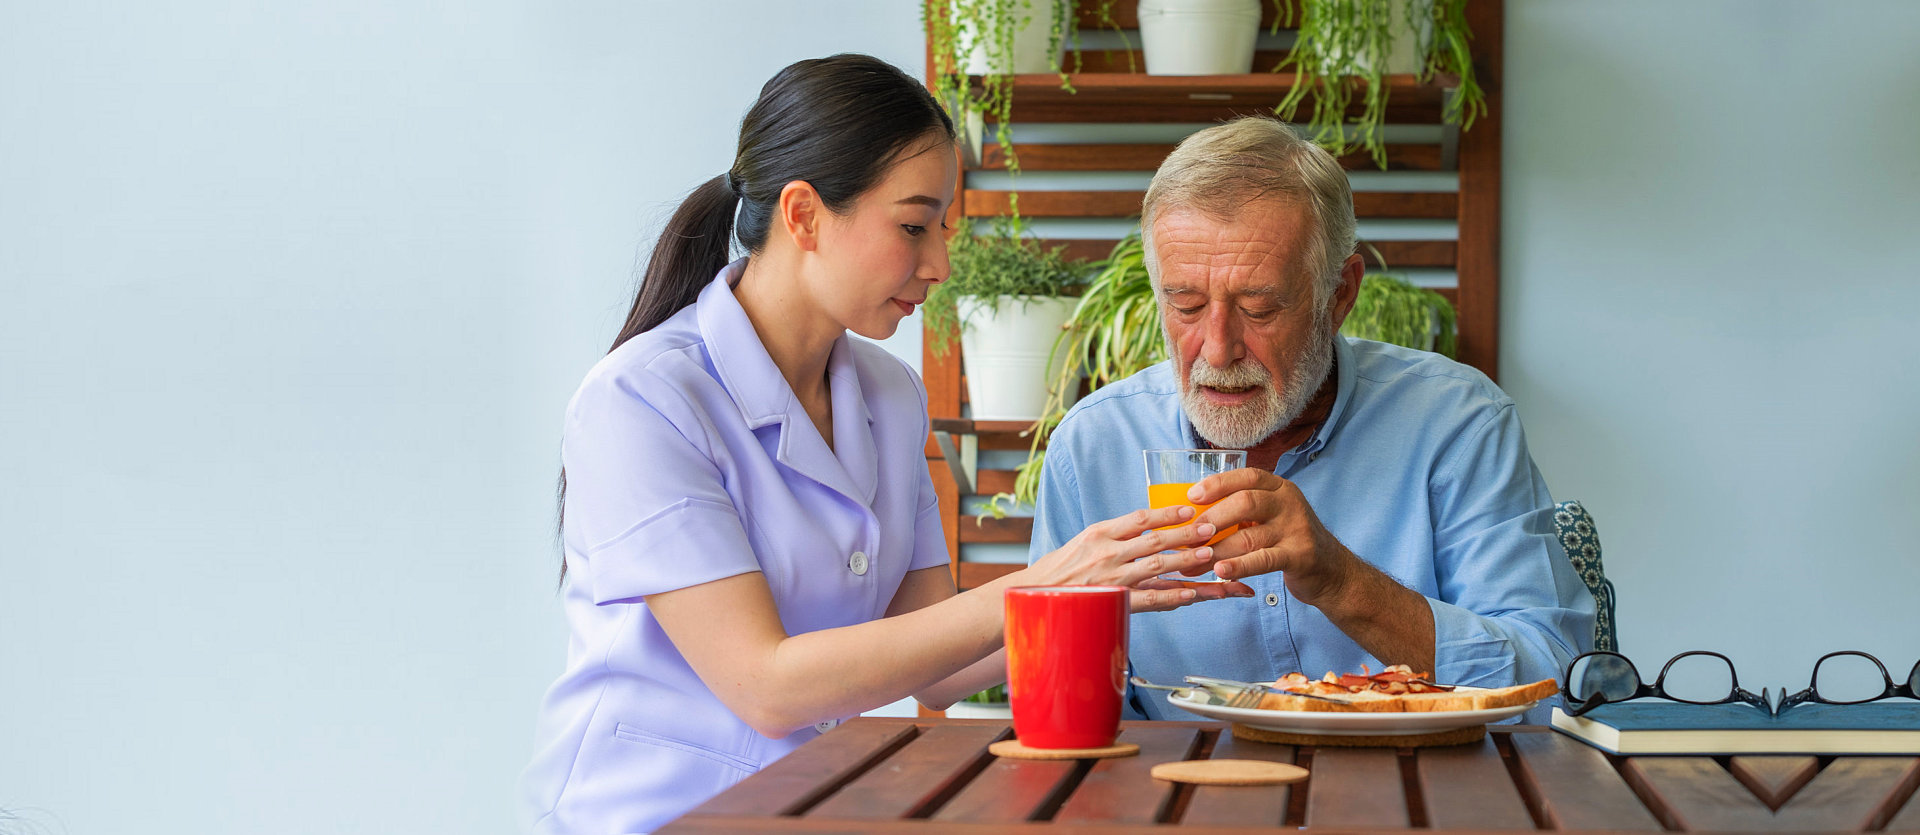 caregiver assisting old man in eating